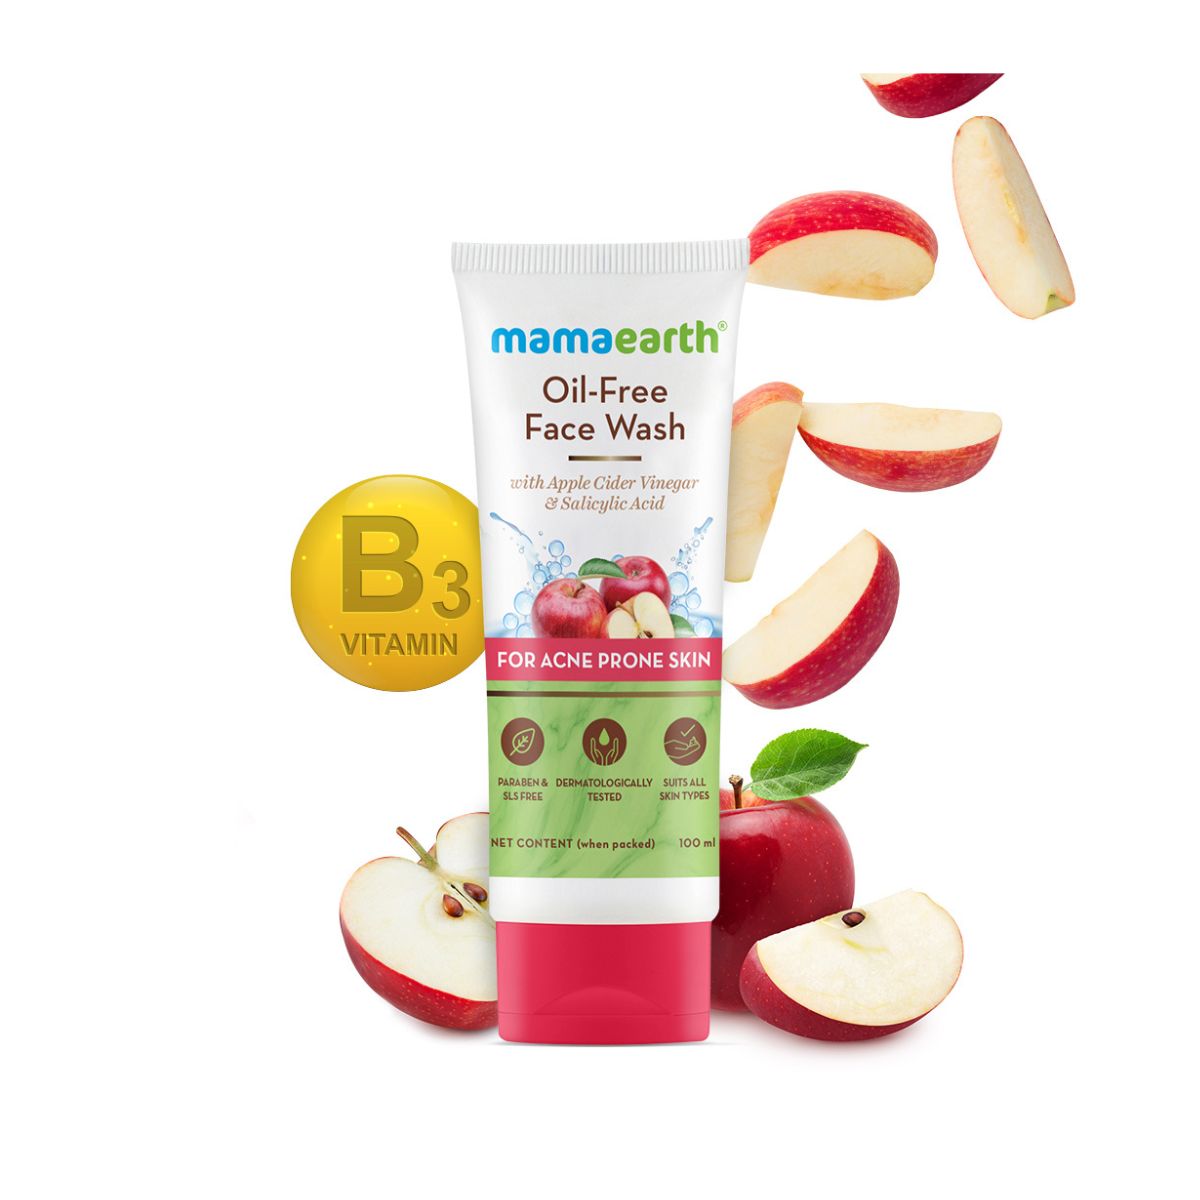 Mamaearth Oil-Free Face Wash With Apple Cider Vinegar & Salicylic Acid For Acne Prone Skin - 100ml